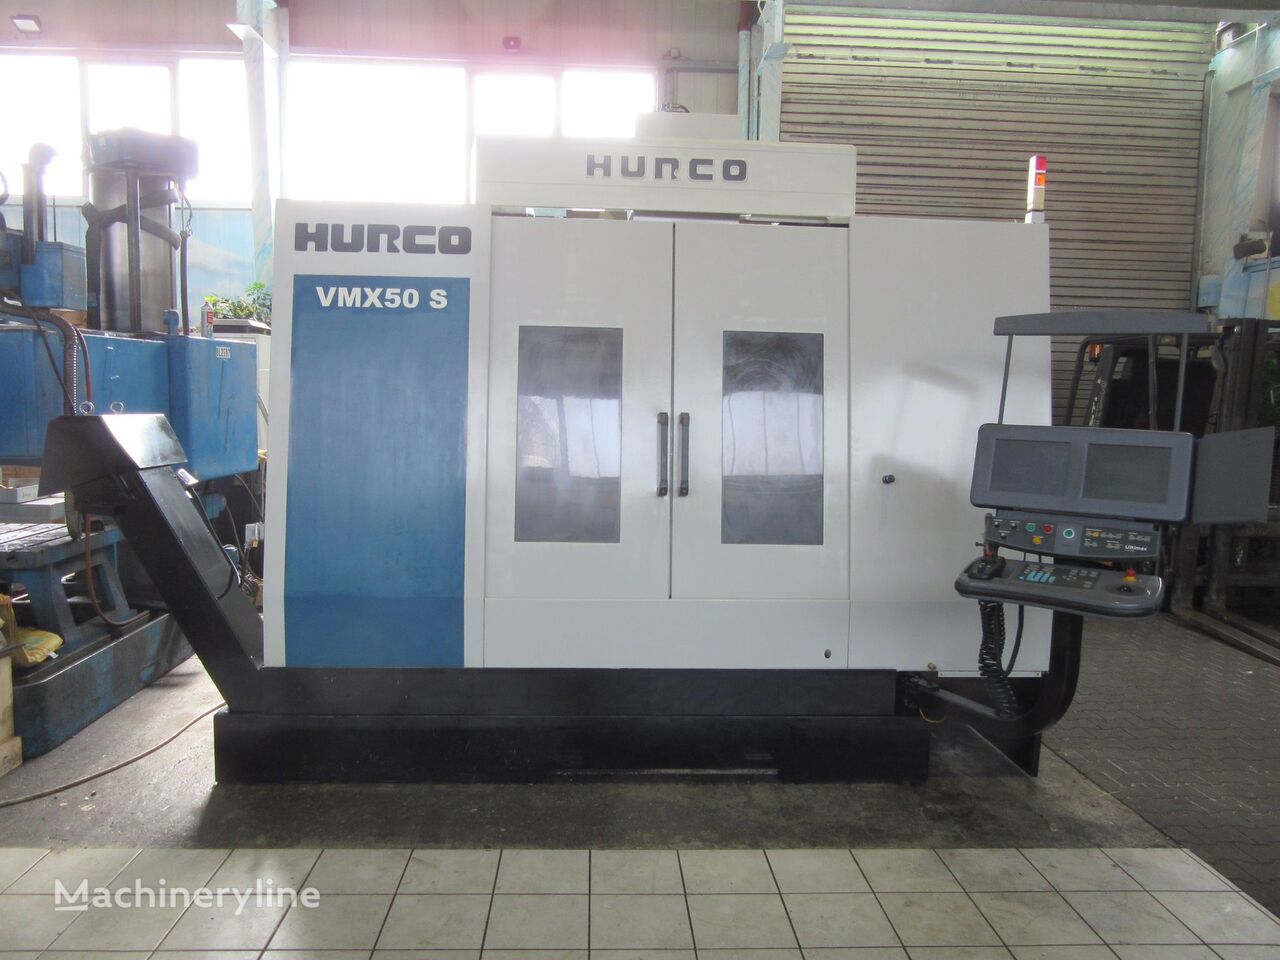 Hurco VMX 50 S machining centre